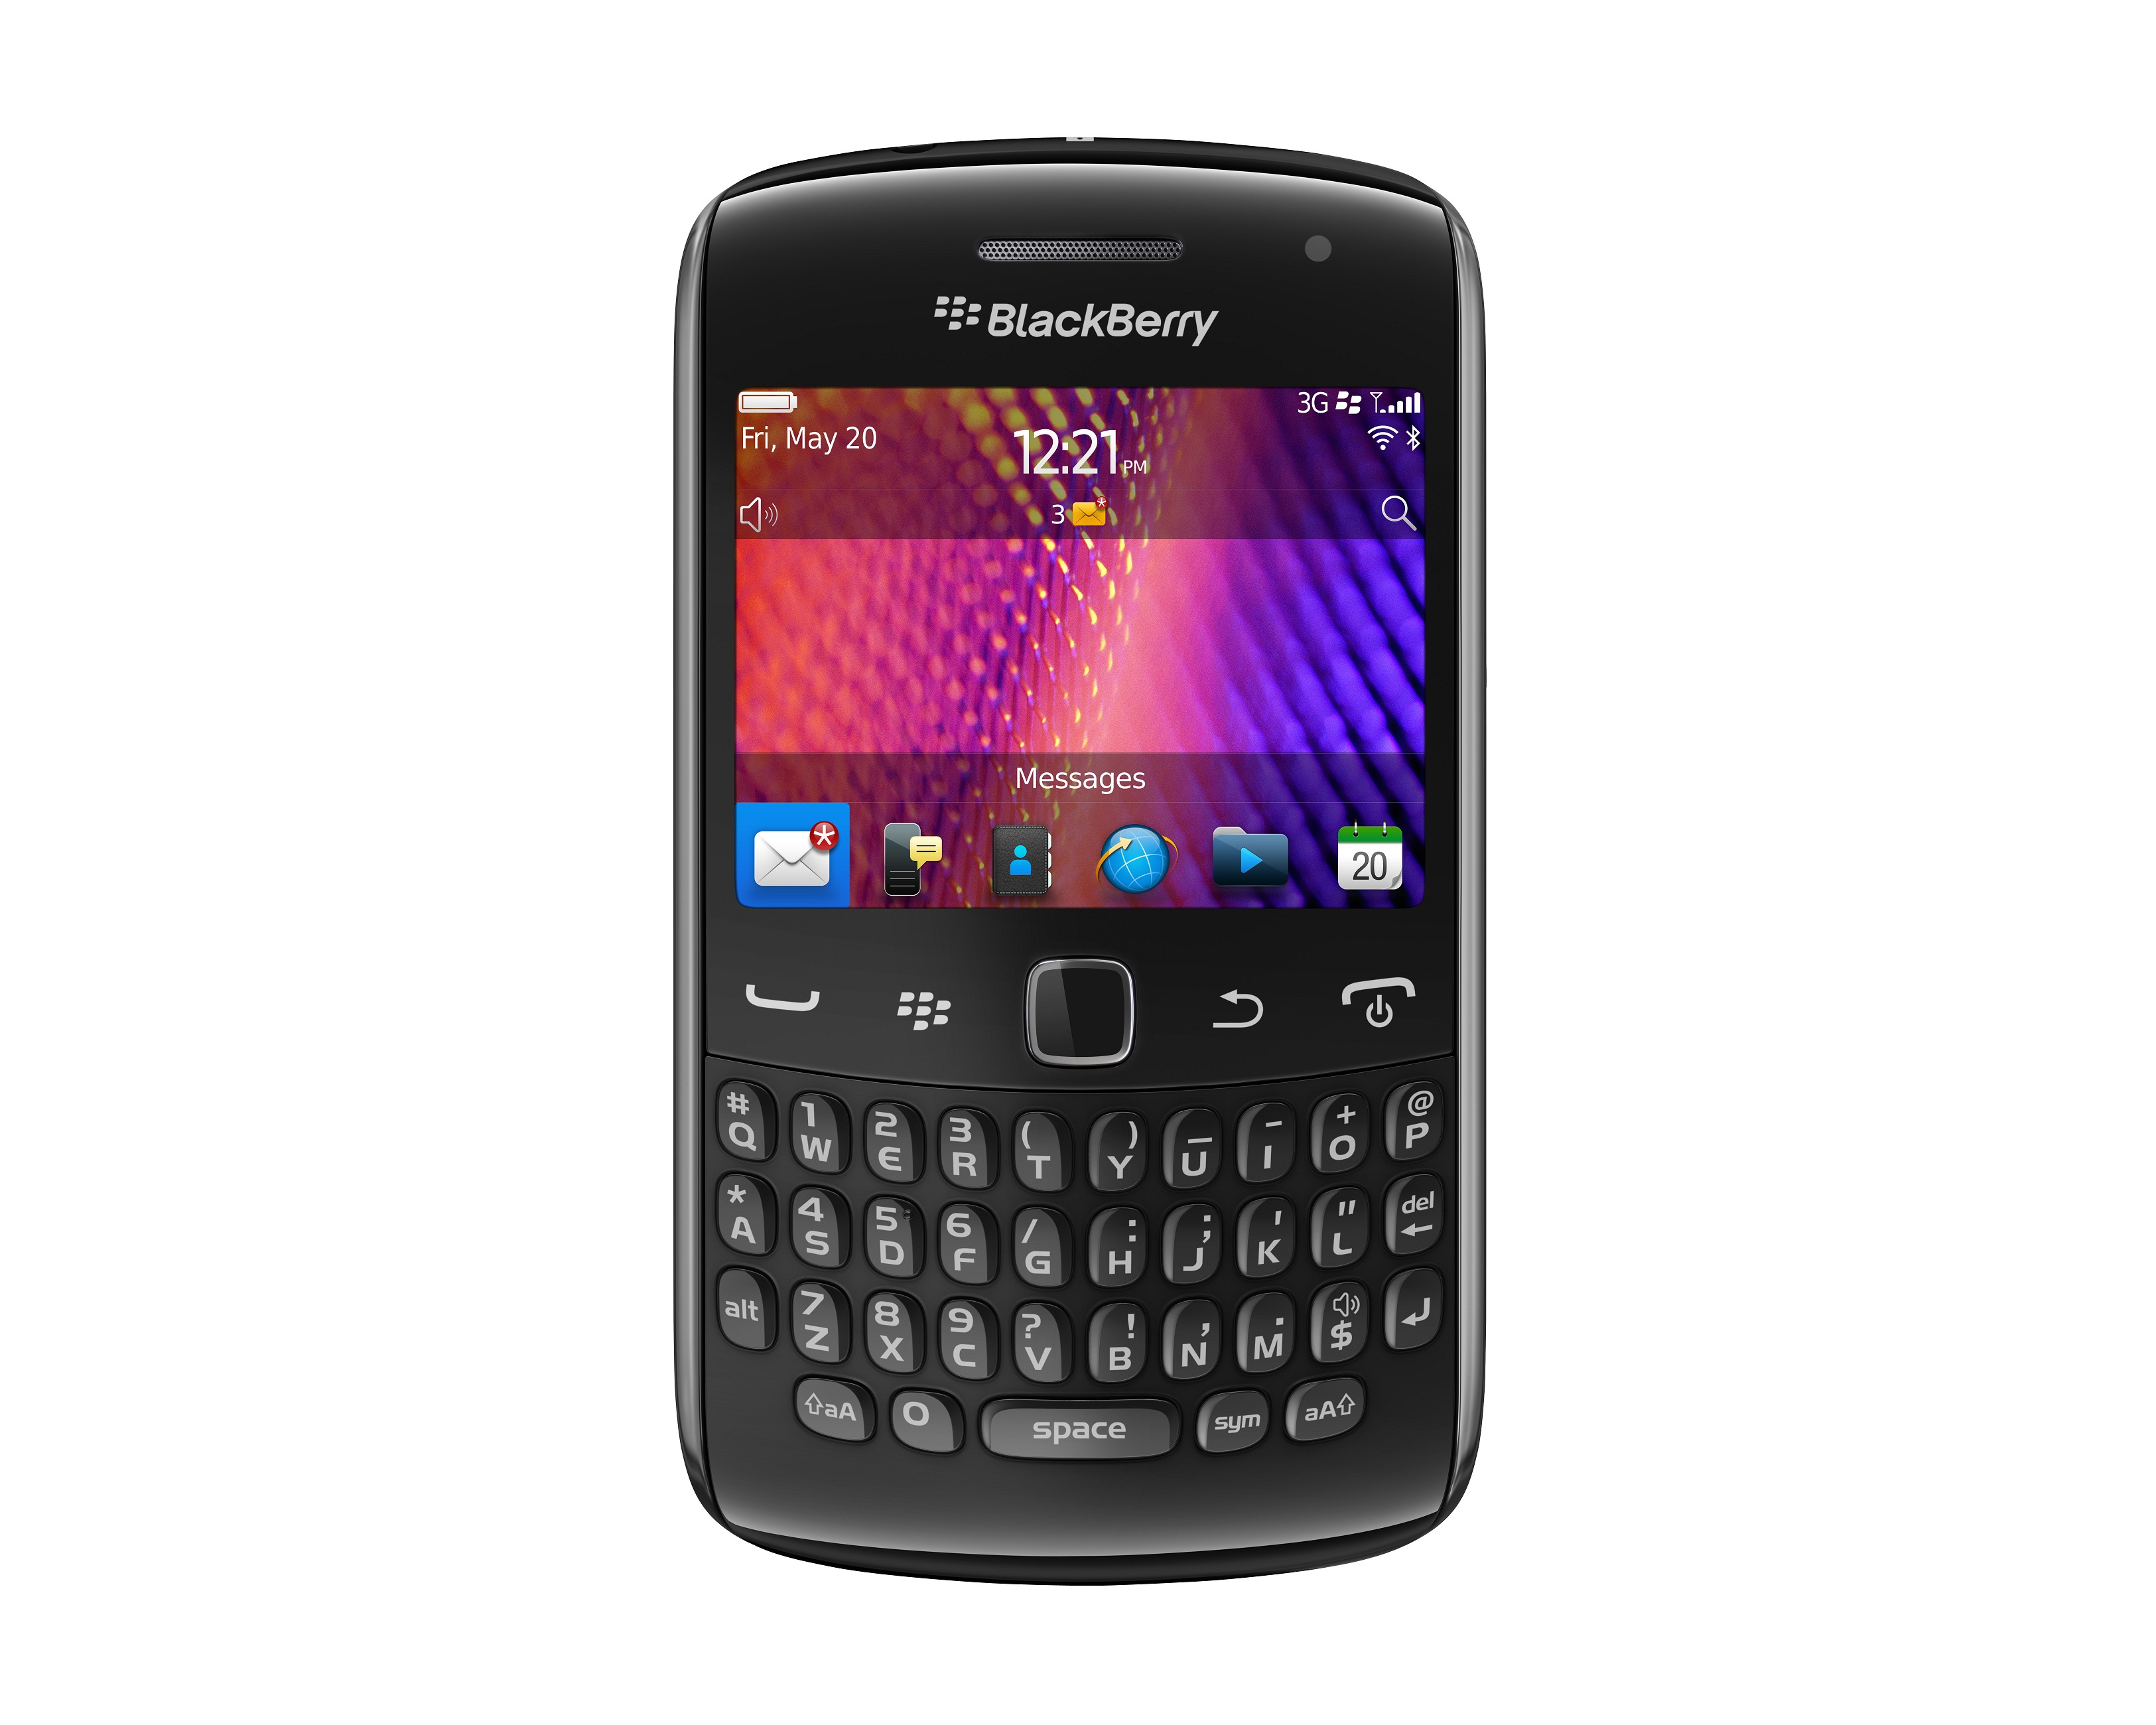 The new Blackberry